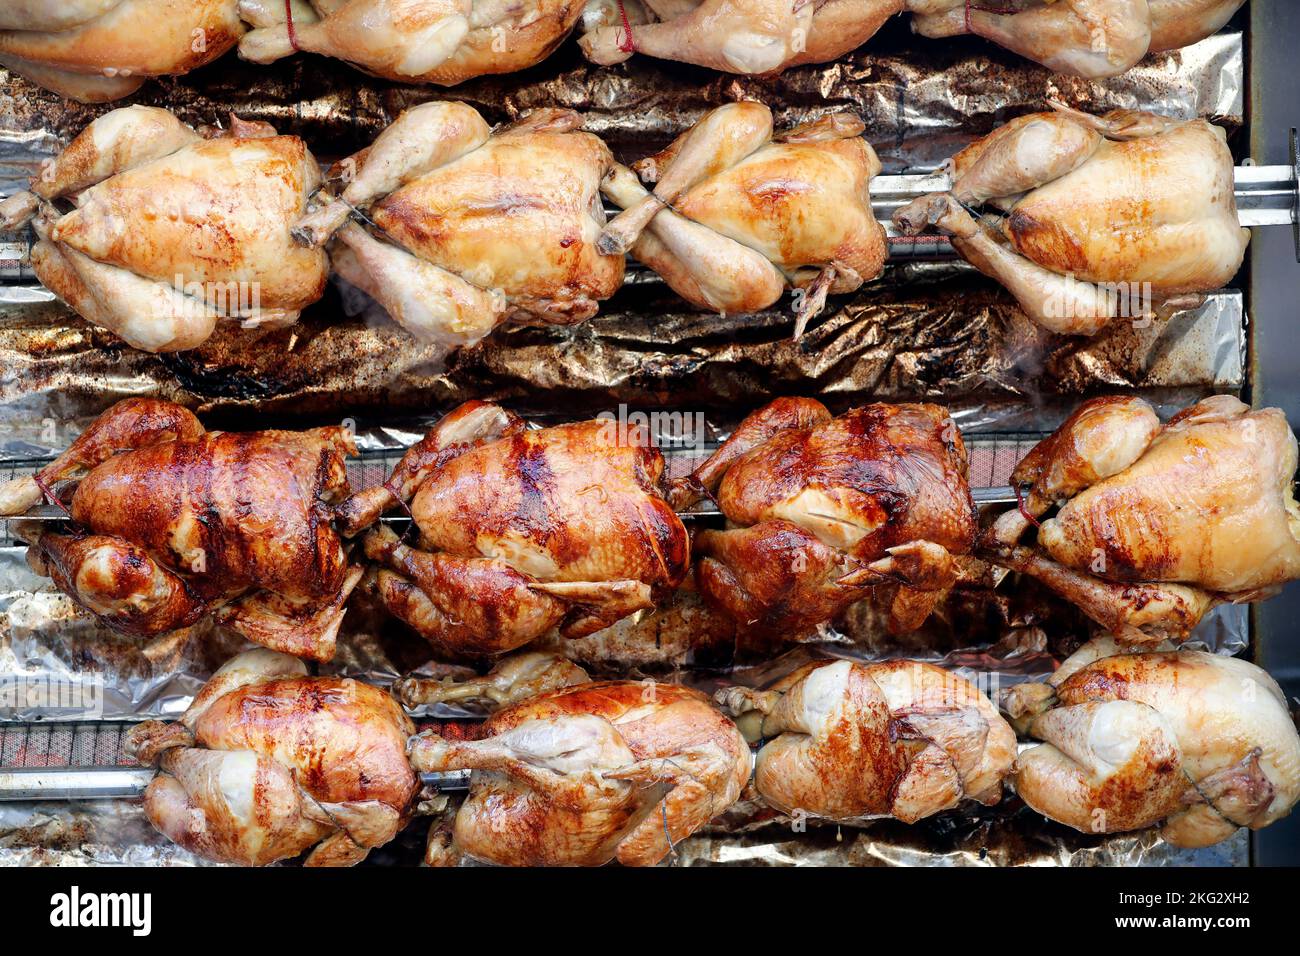 Pollos asados frescos fotografías e imágenes de alta resolución - Alamy